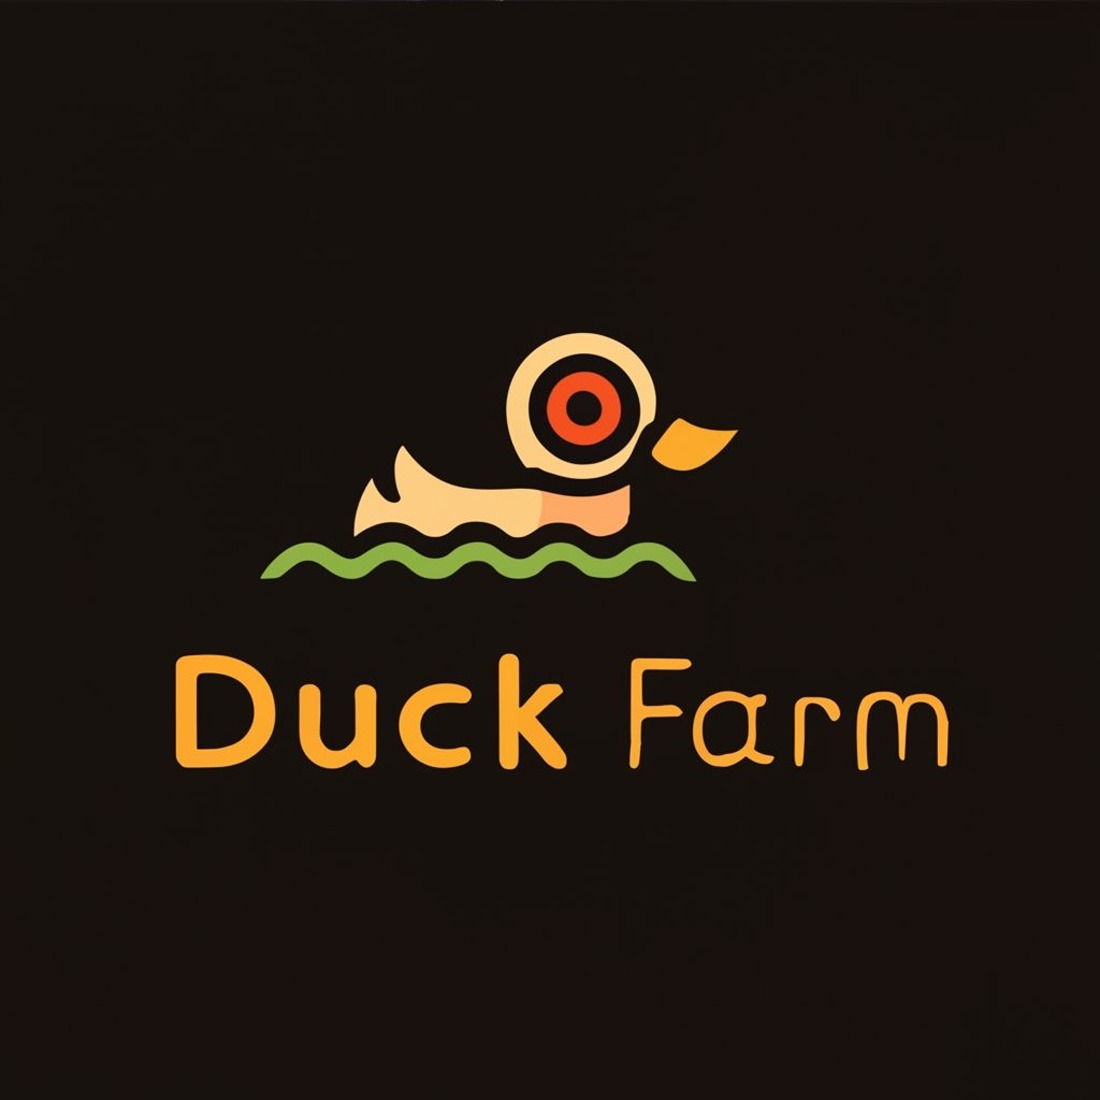 a logo for duck farm named duck farm 11zon 834